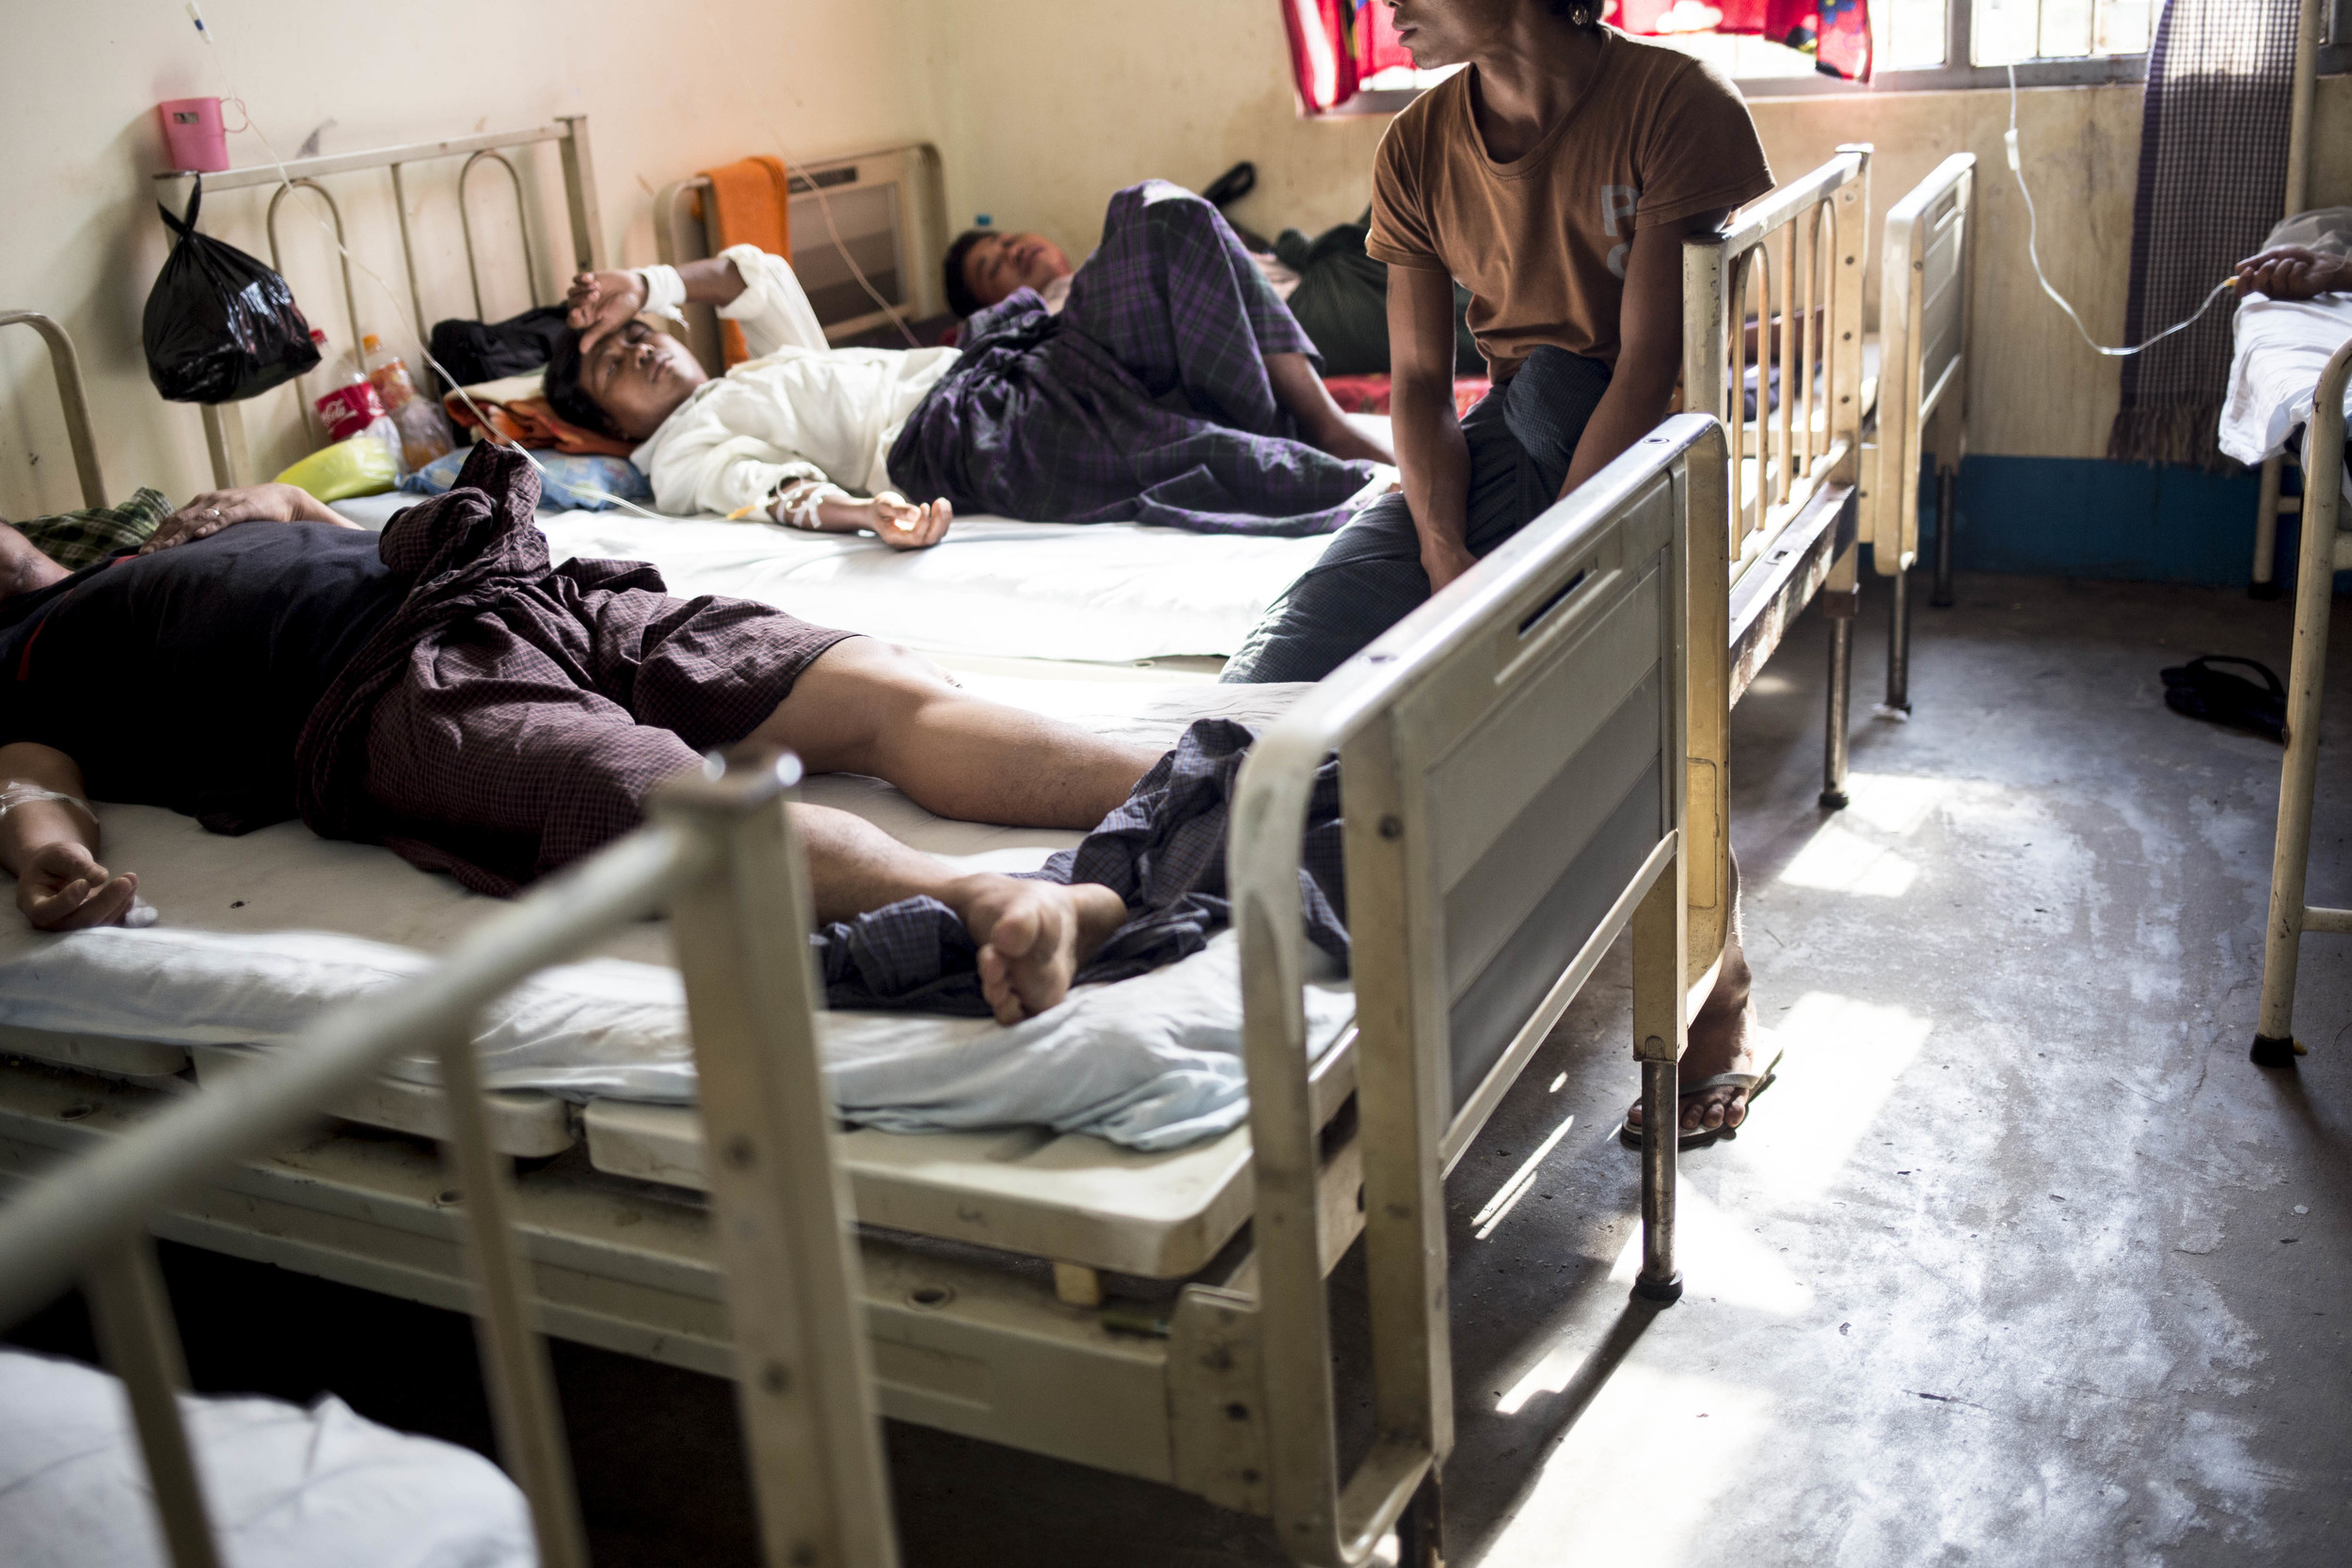  The alcoholic until at Yangon mental hospital. Photo by Ann Wang 